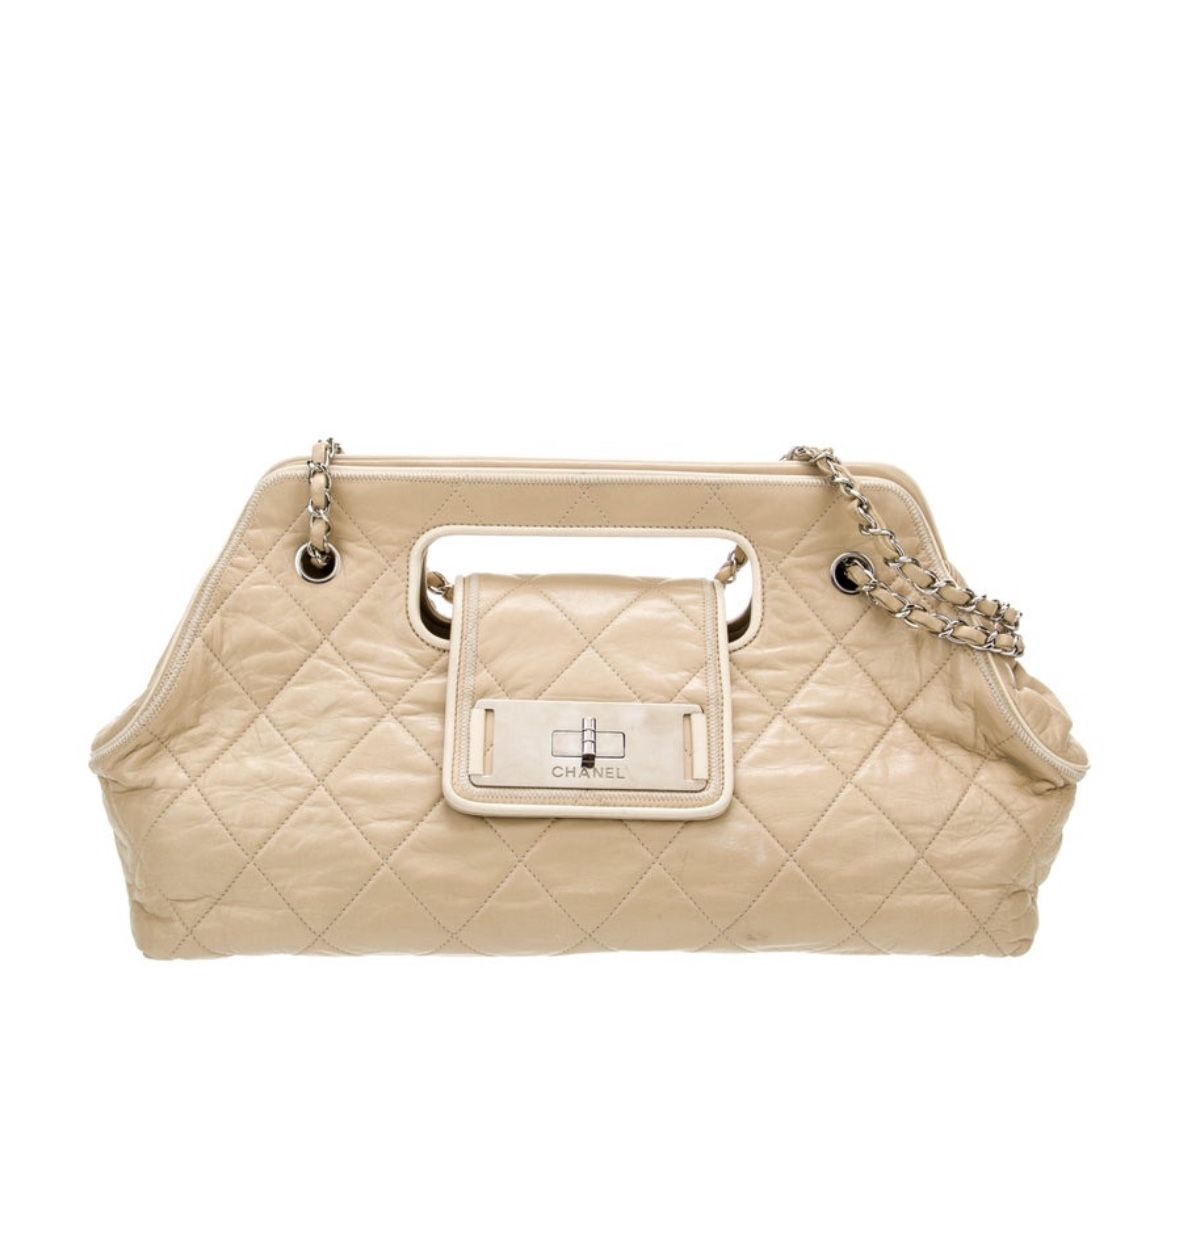 Authentic Chanel Bag 